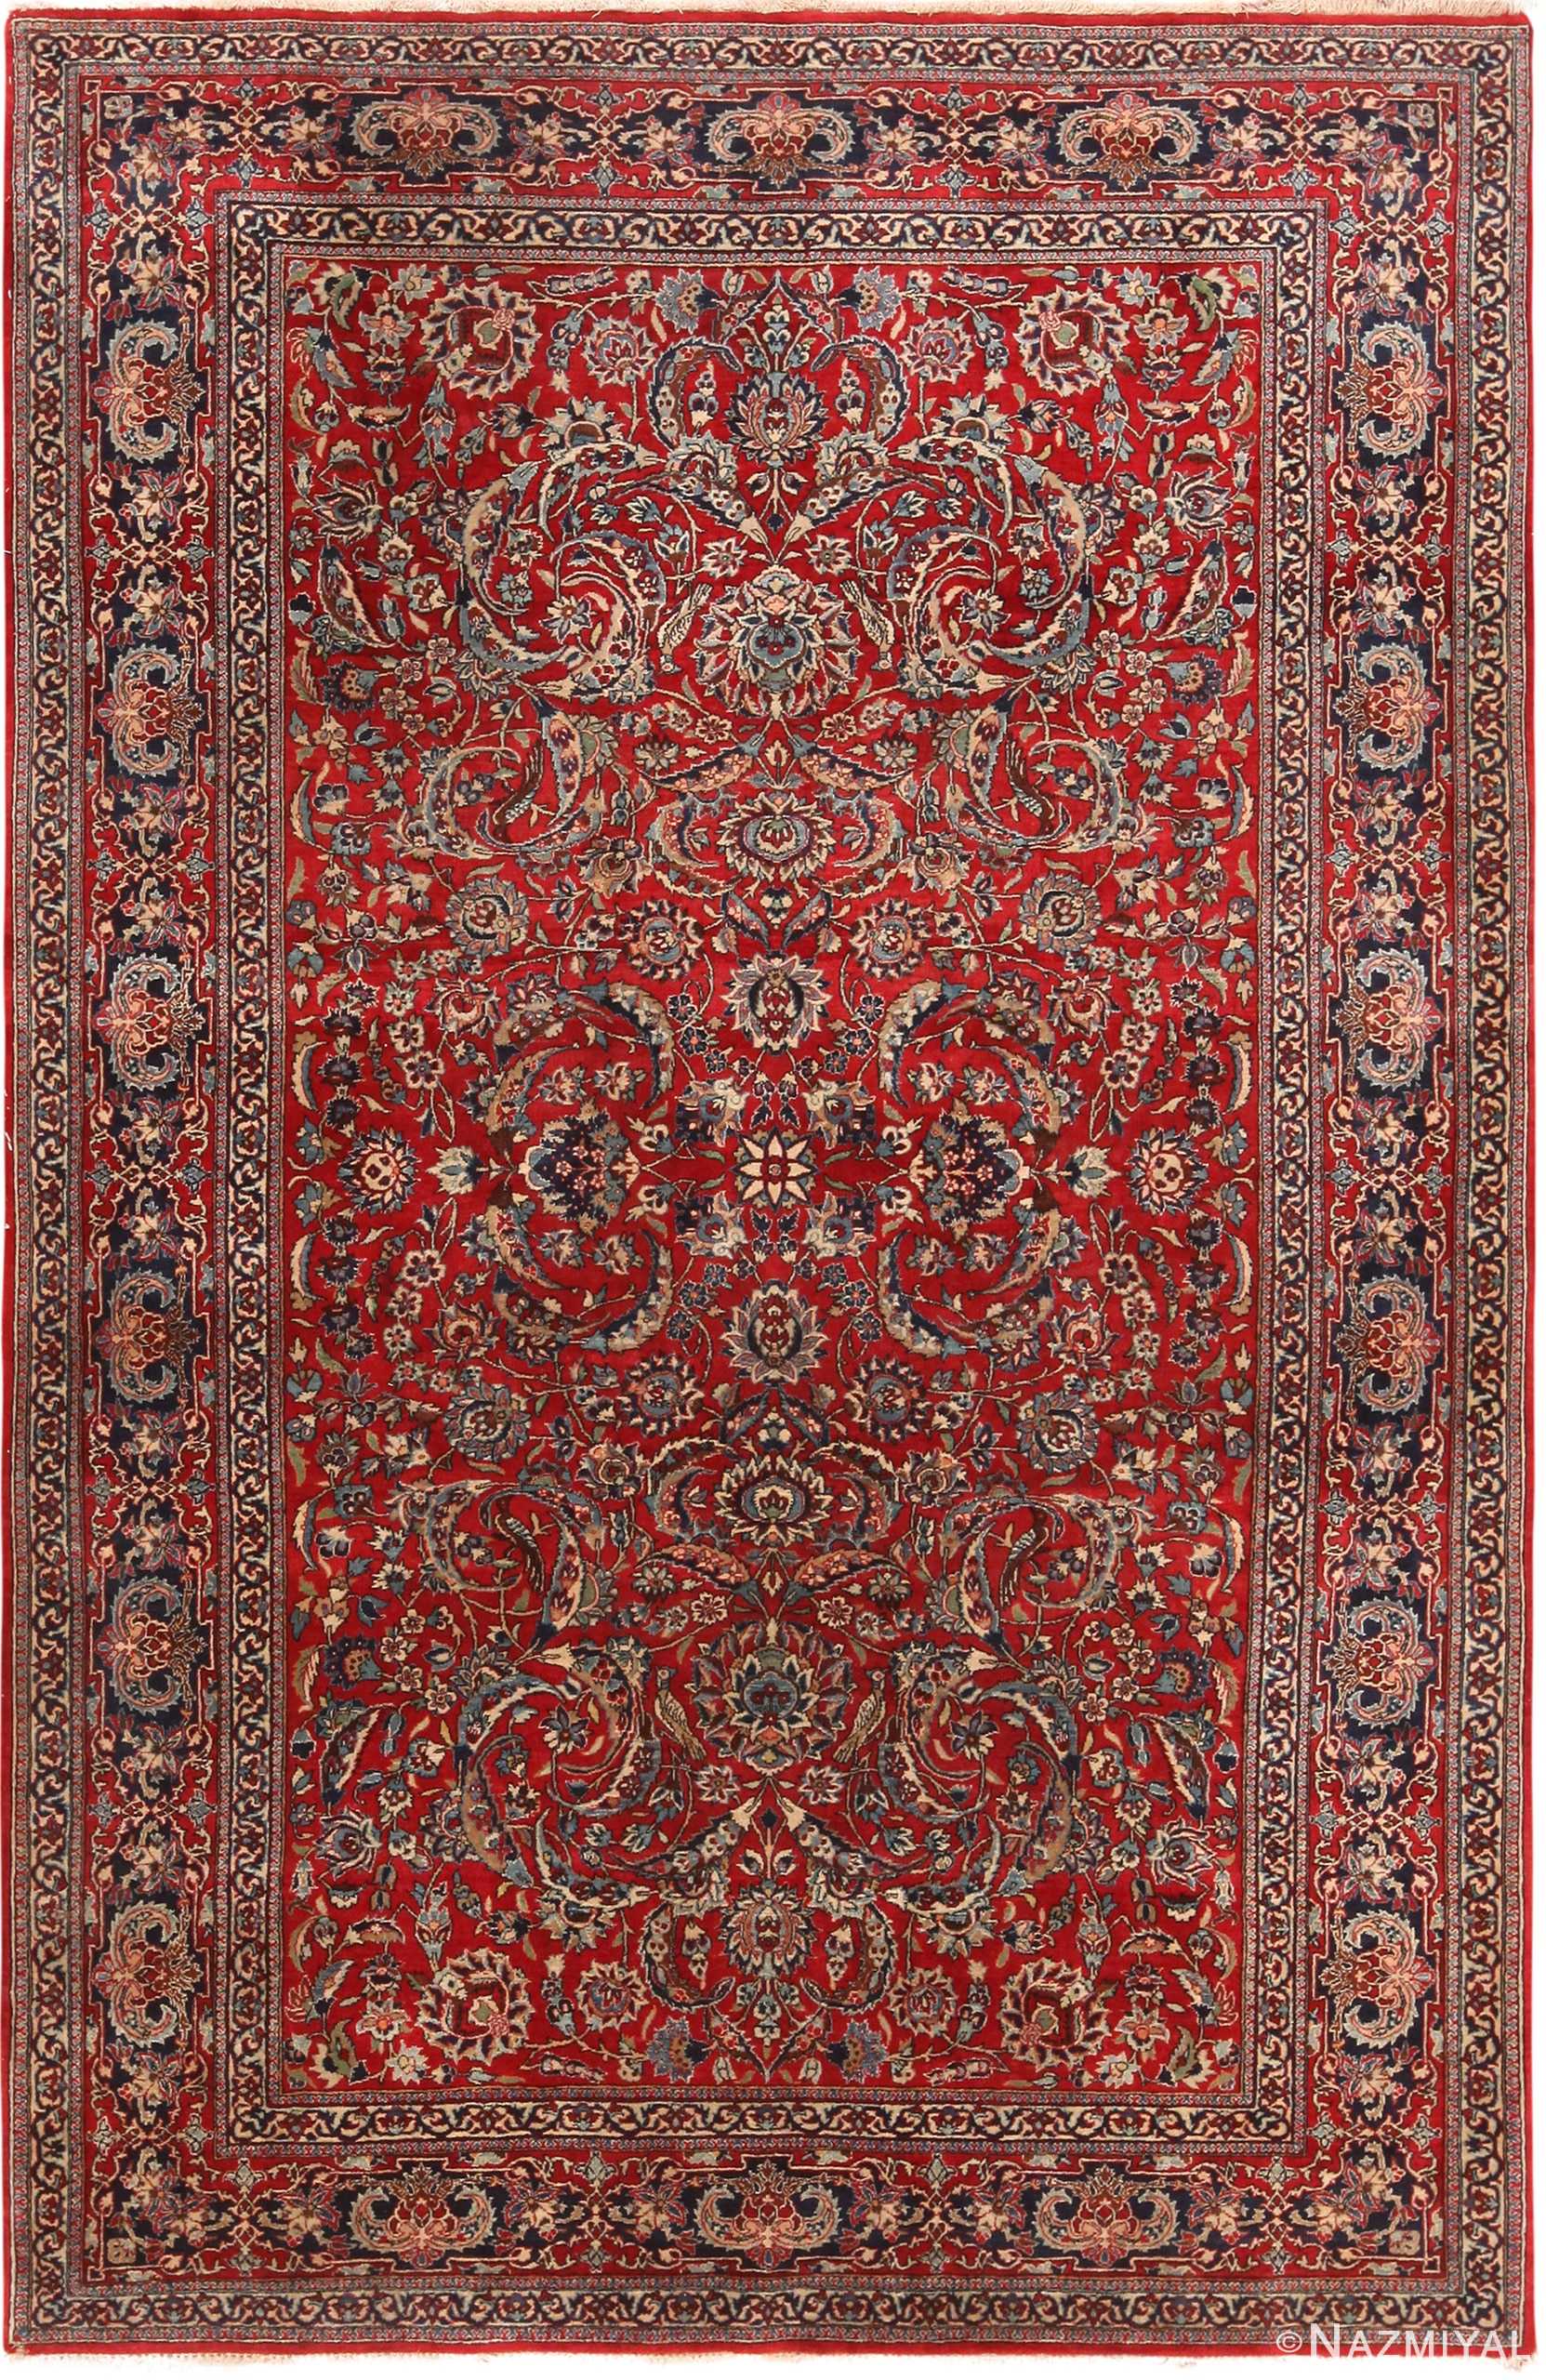 Striking Antique Persian Isfahan Rug 71119 by Nazmiyal Antique Rugs